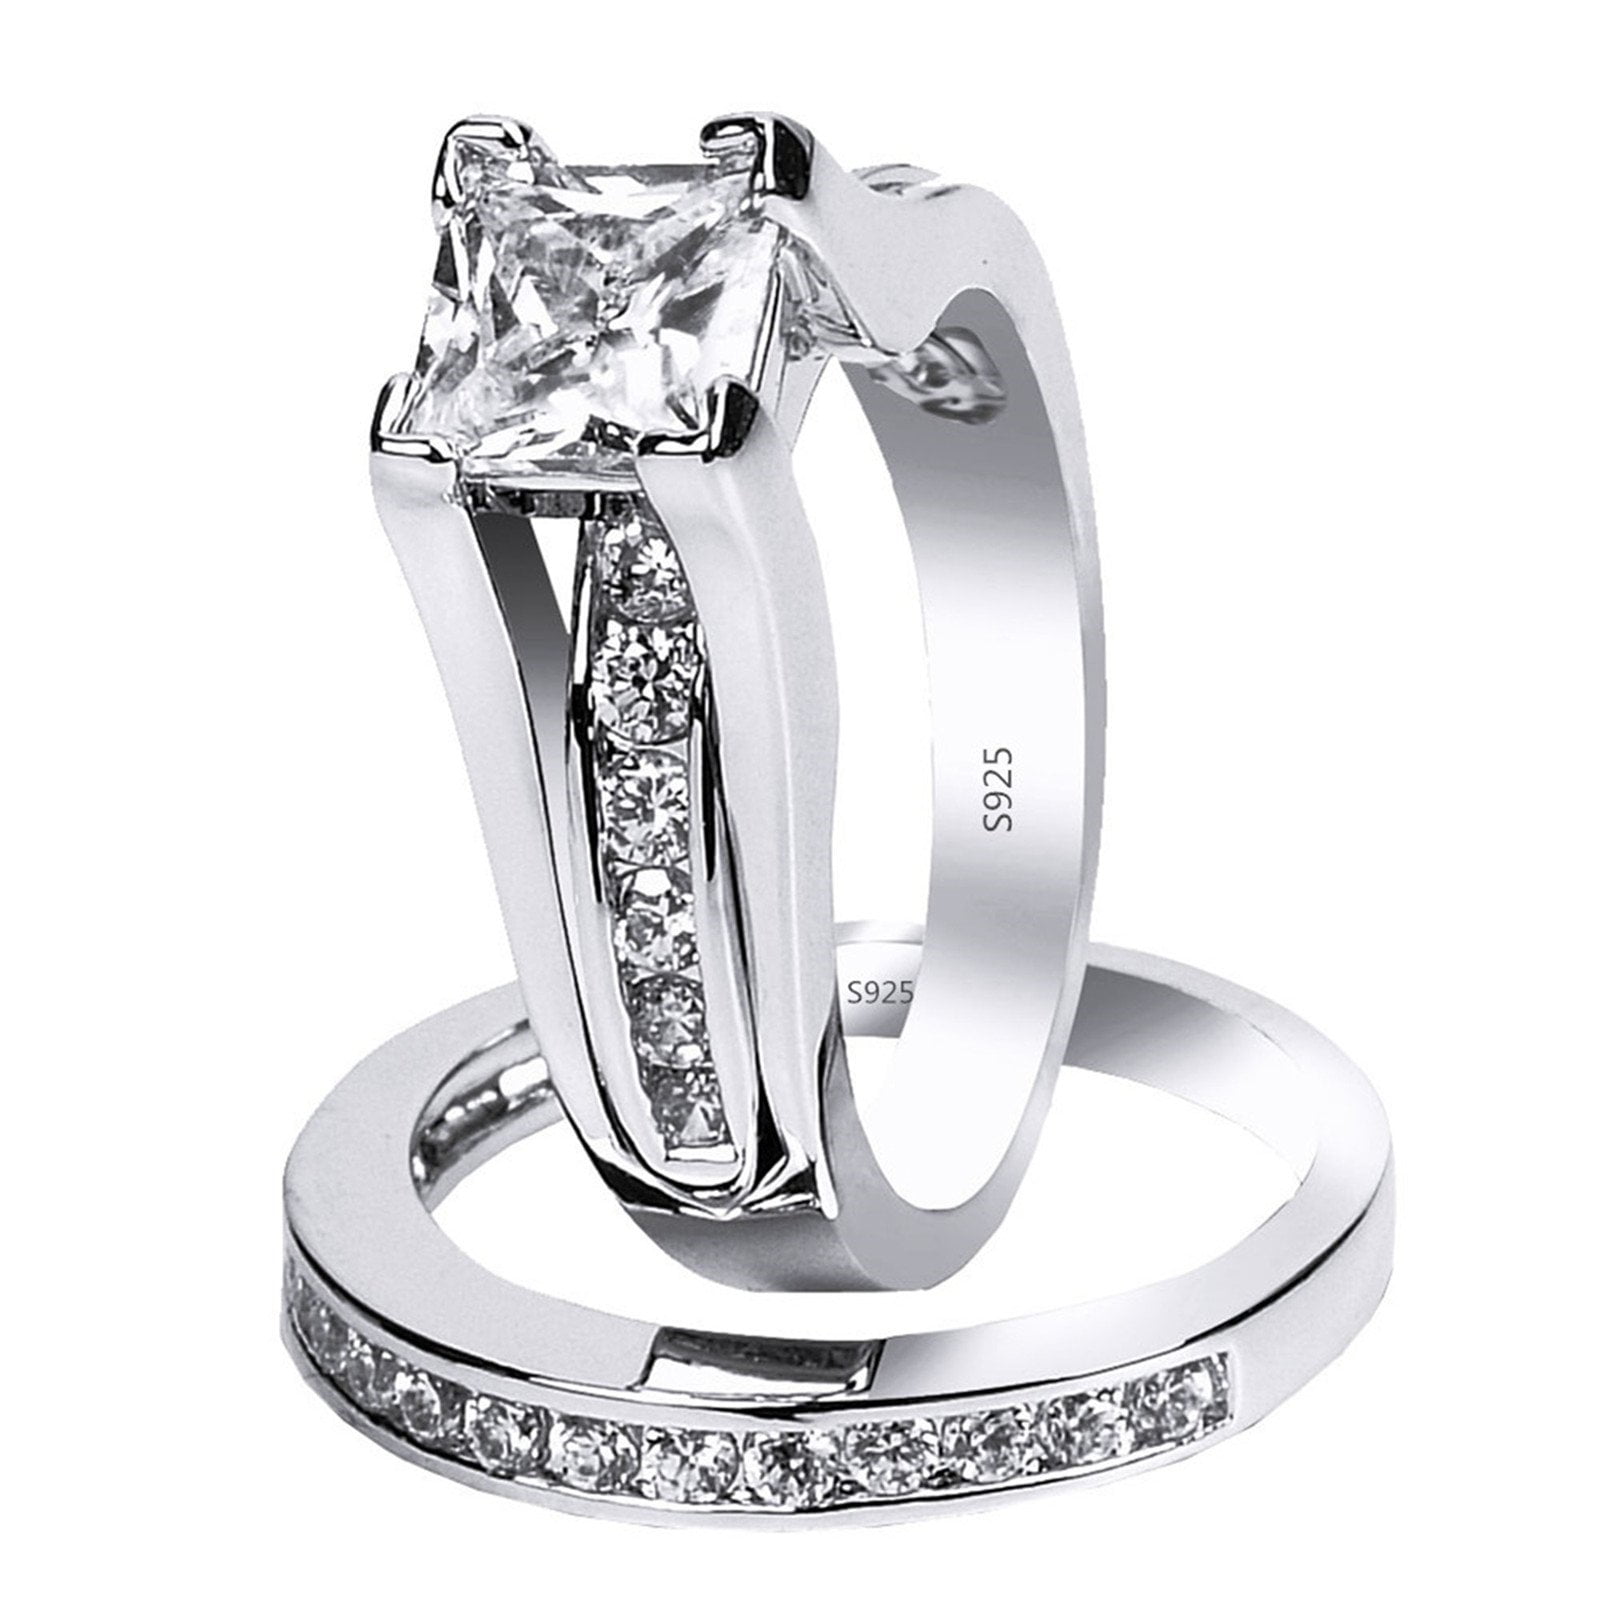 2.10 Ct Princess Cut AAA CZ 925 Sterling Silver Wedding Ring Set Women's Sz 5-11 